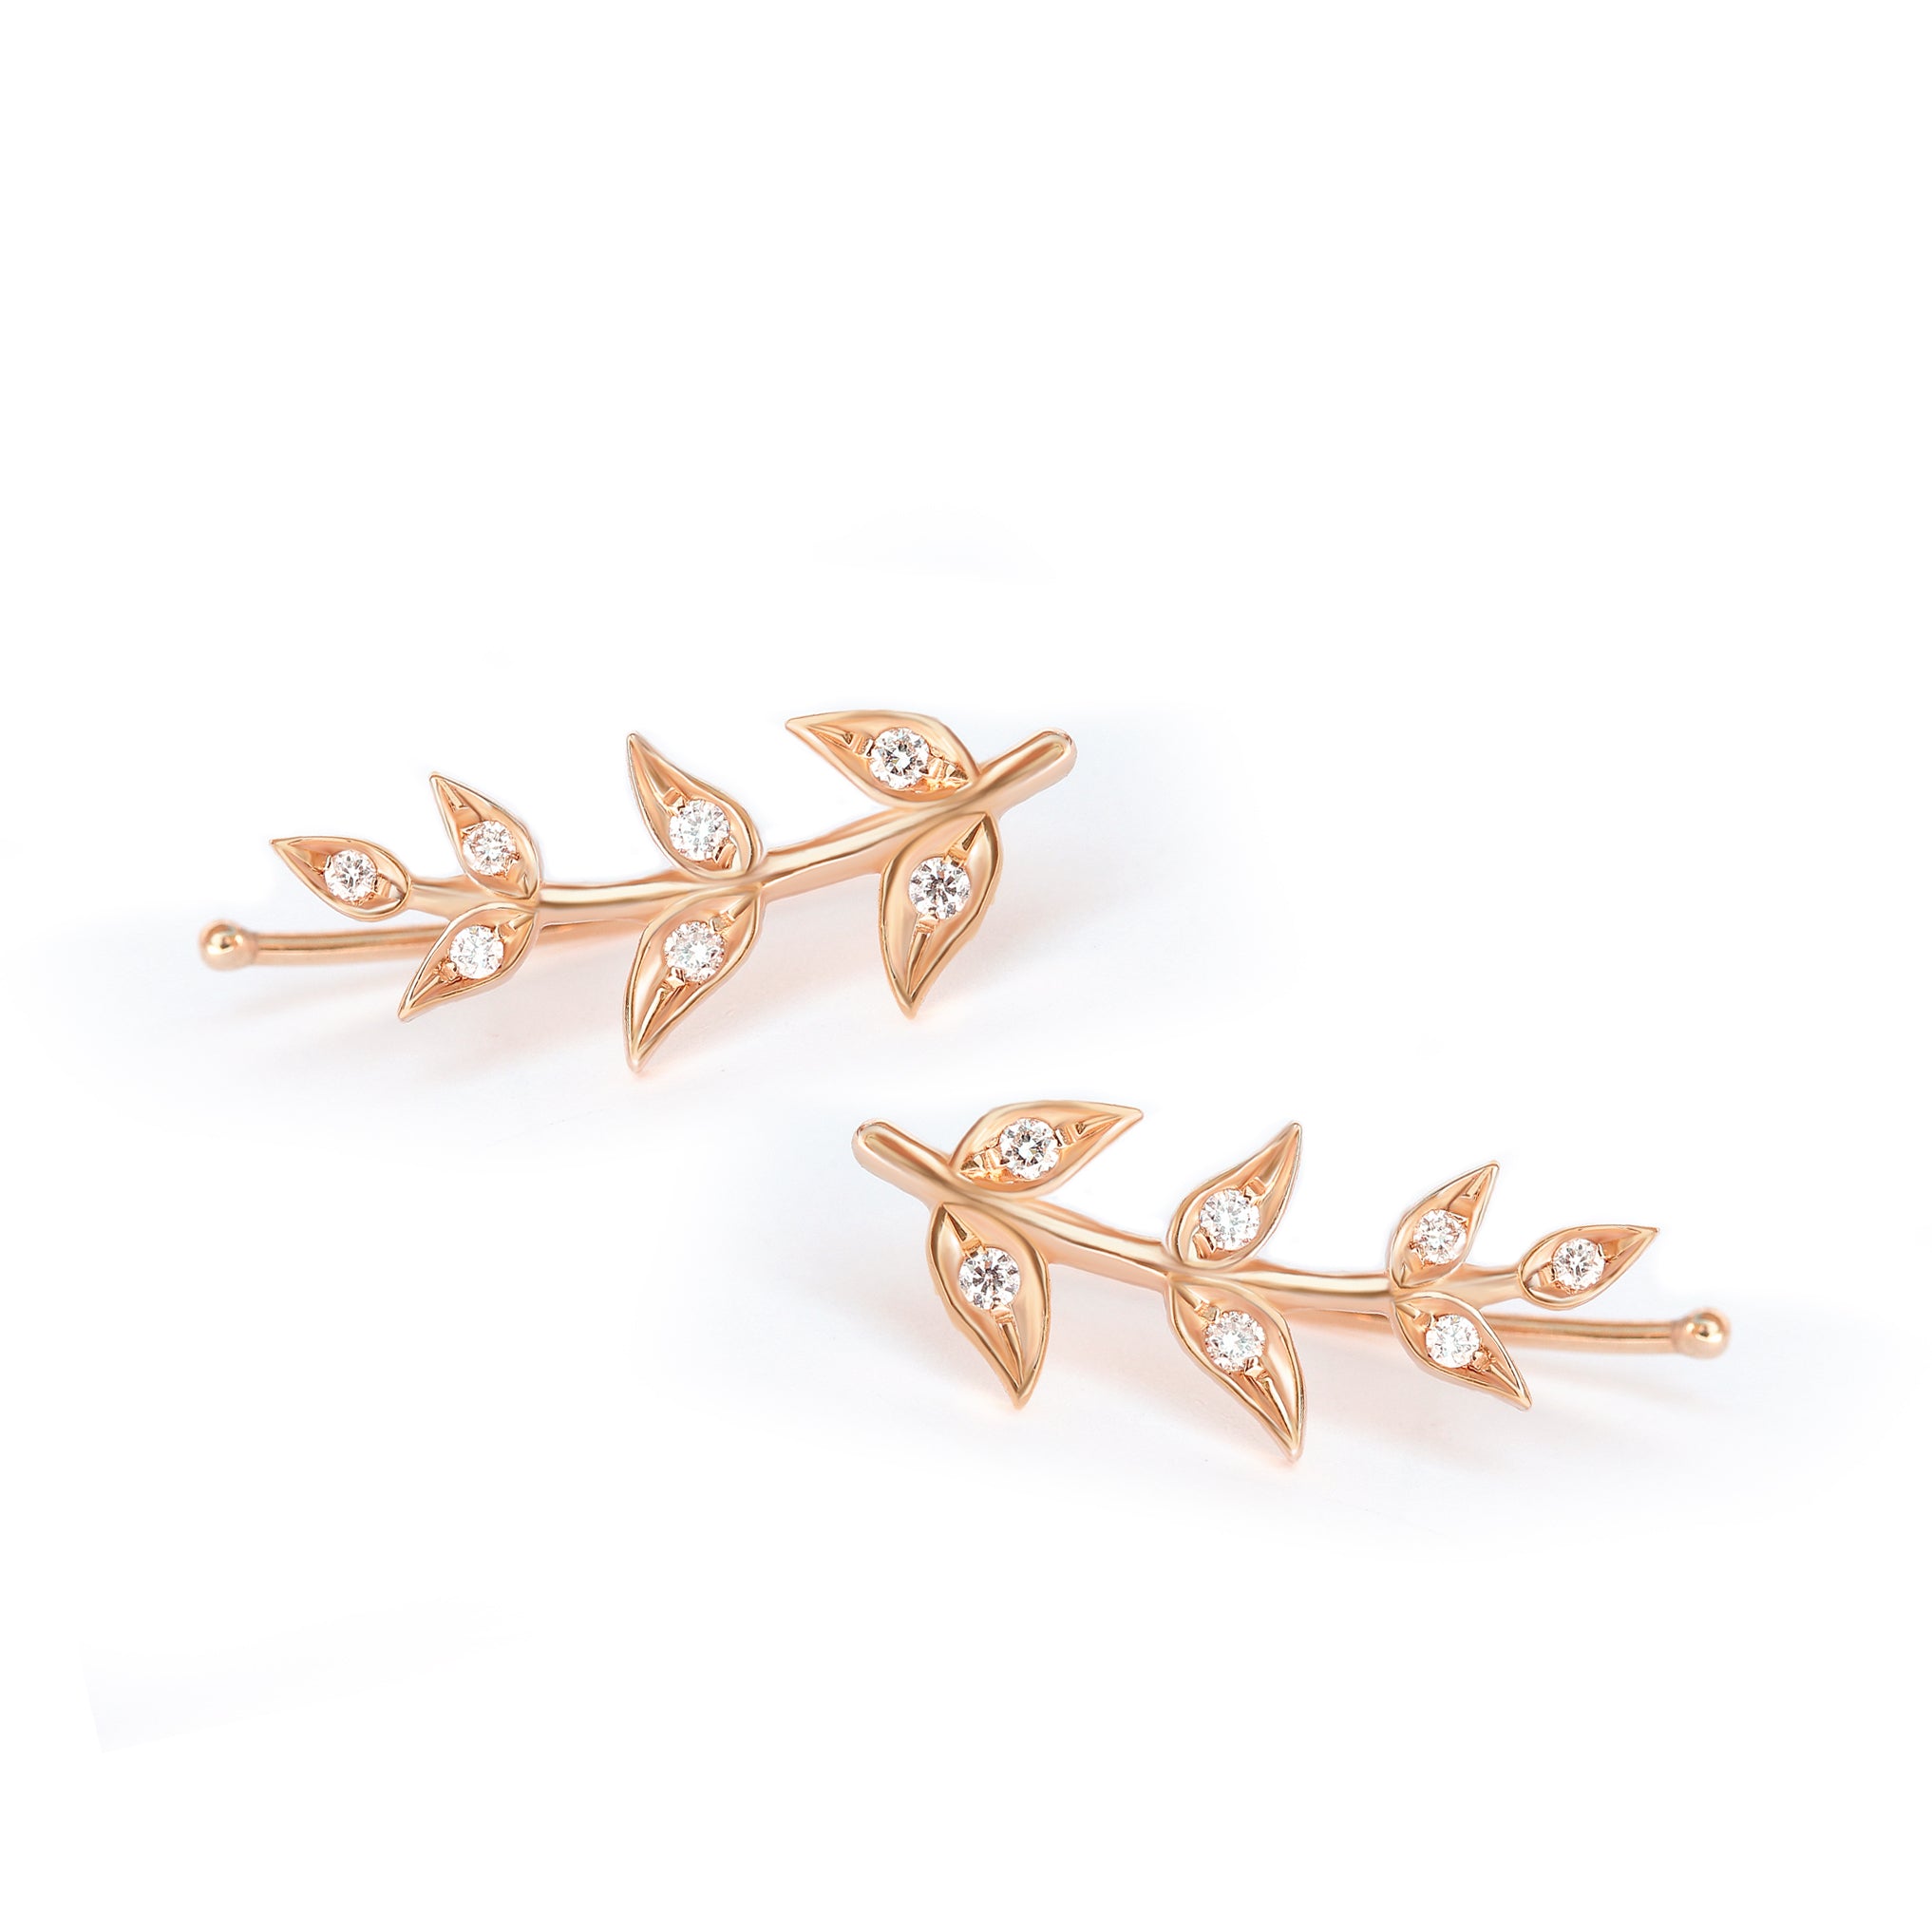 Olive Branch Leaves gold & Diamonds wedding earring - 14K Yellow gold ,Ready to ship - sillyshinydiamonds